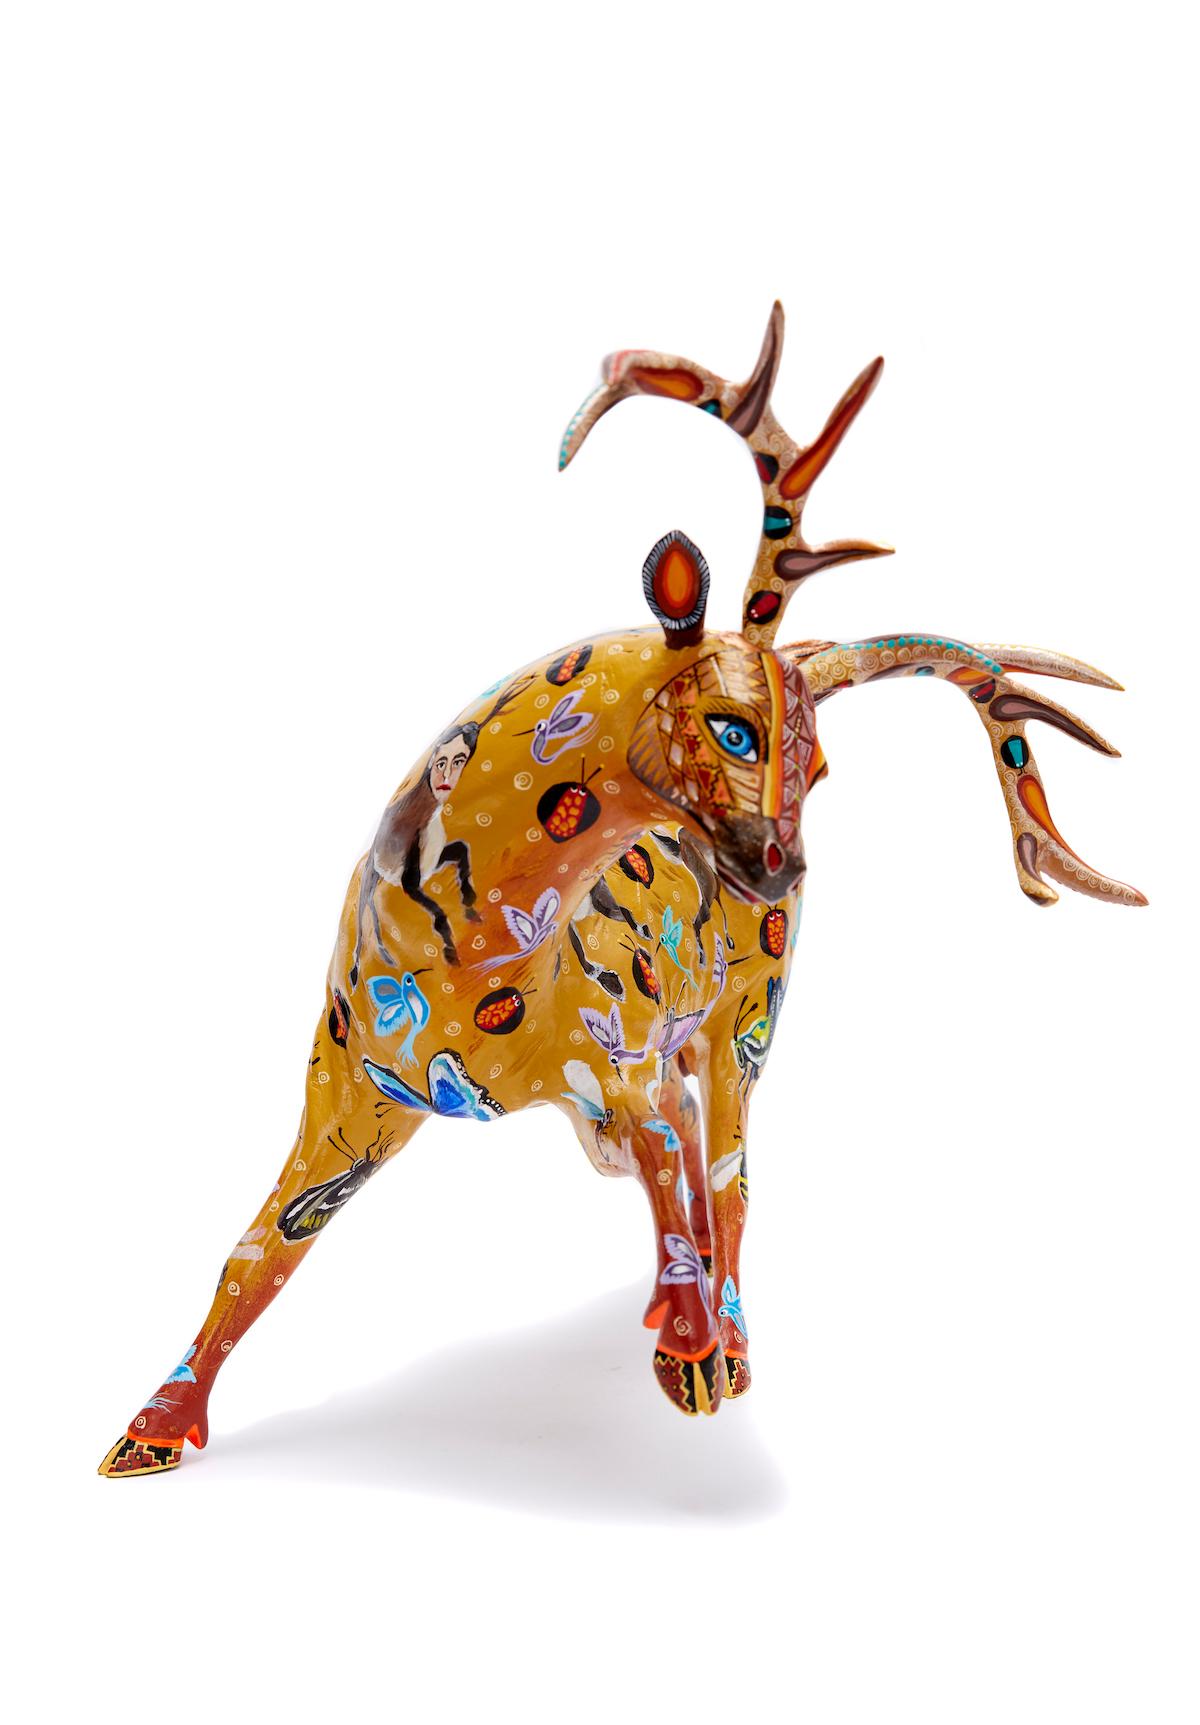 Venado Nahual - Nahual Deer Mexican Folk Art  Cactus Fine Art - Sculpture by Fatima Janice Fuentes Piña 